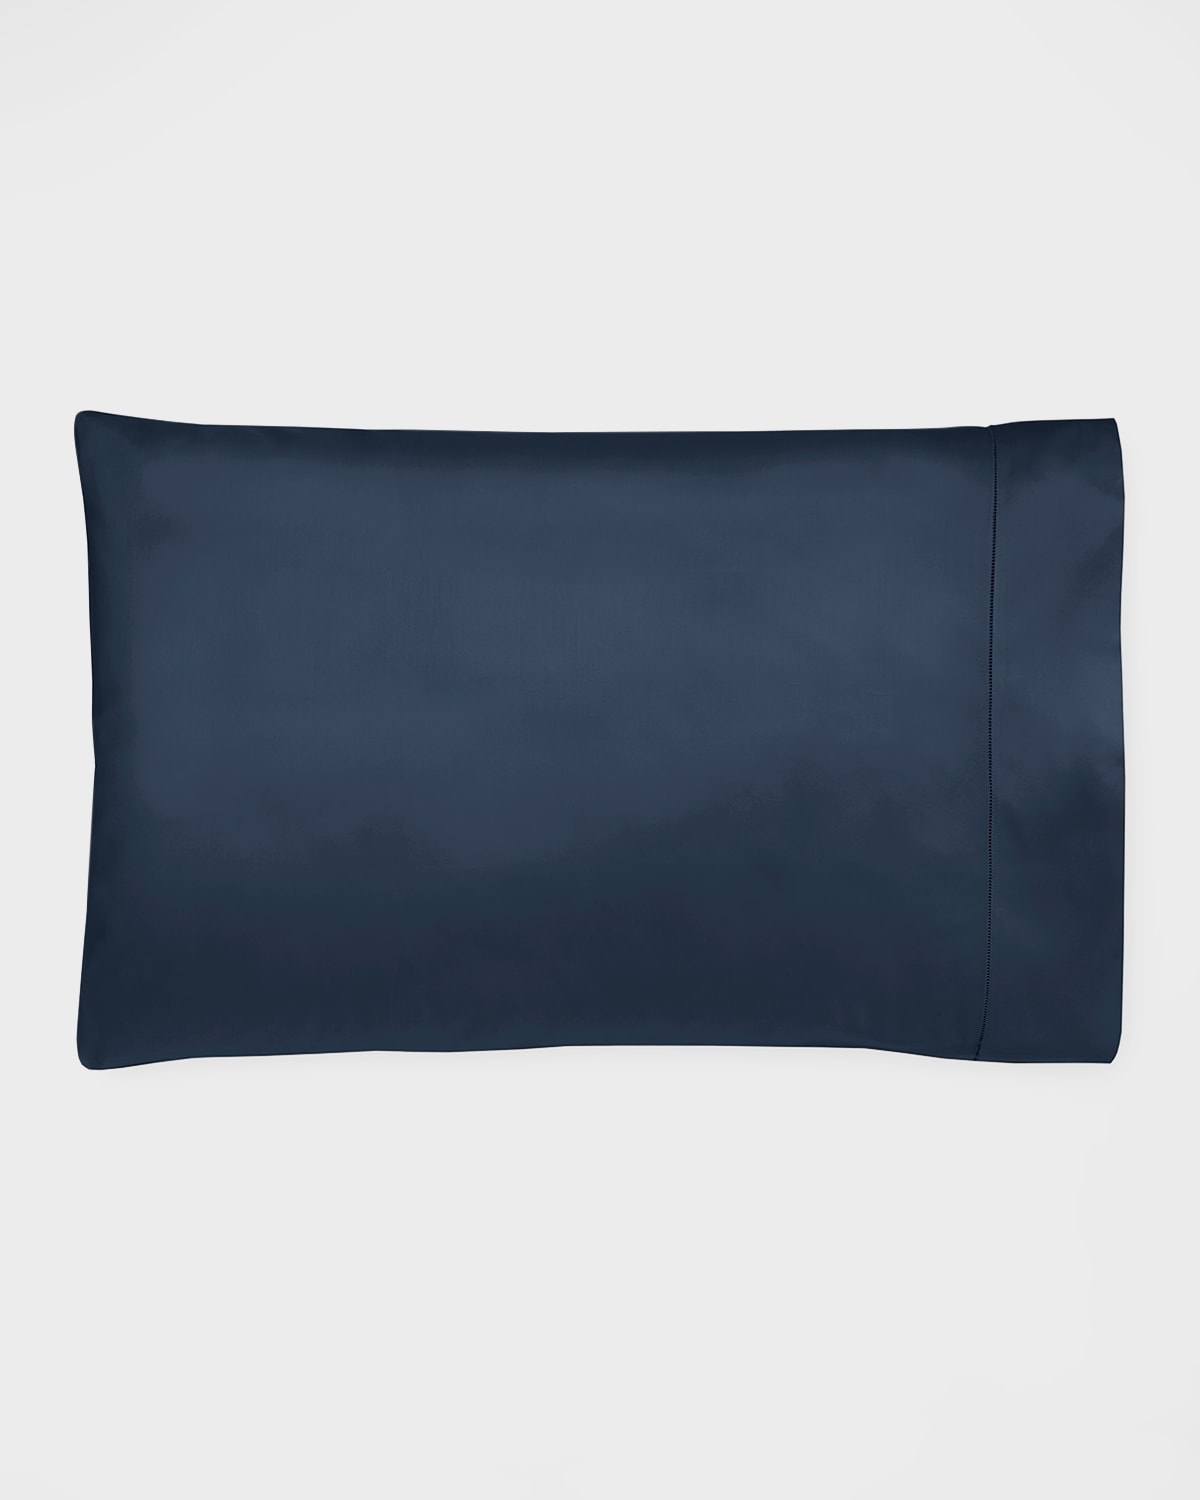 Sferra Giotto Standard Pillowcase In Navy